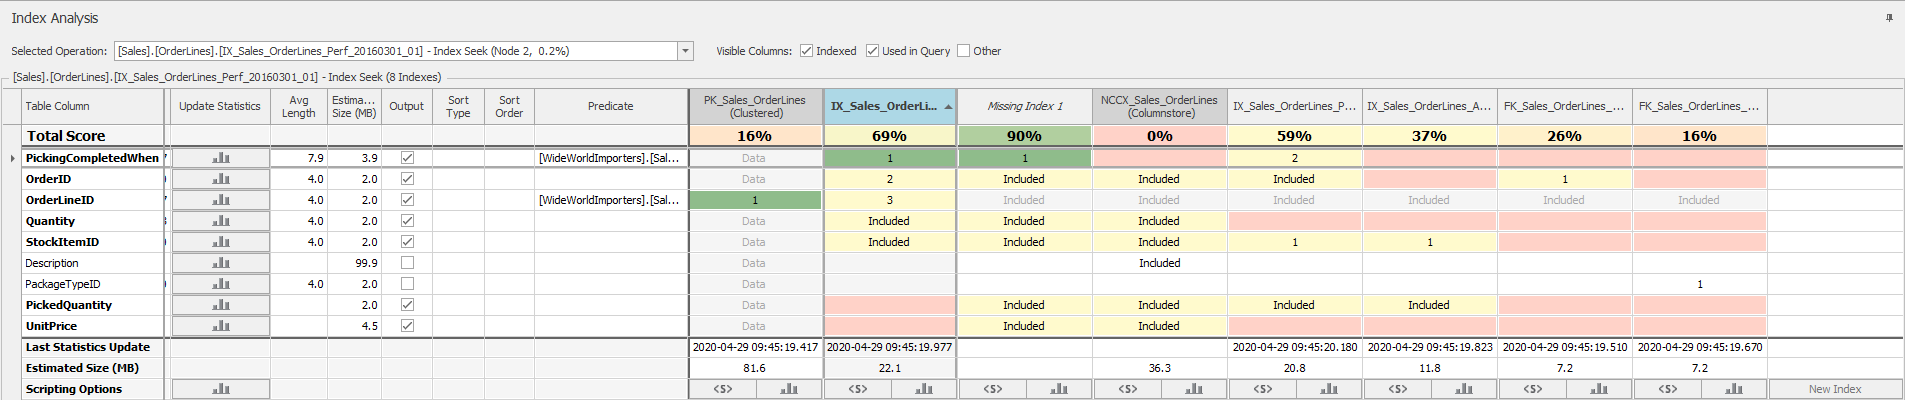 SQL Sentry Plan Explorer Index Analysis Data Grid